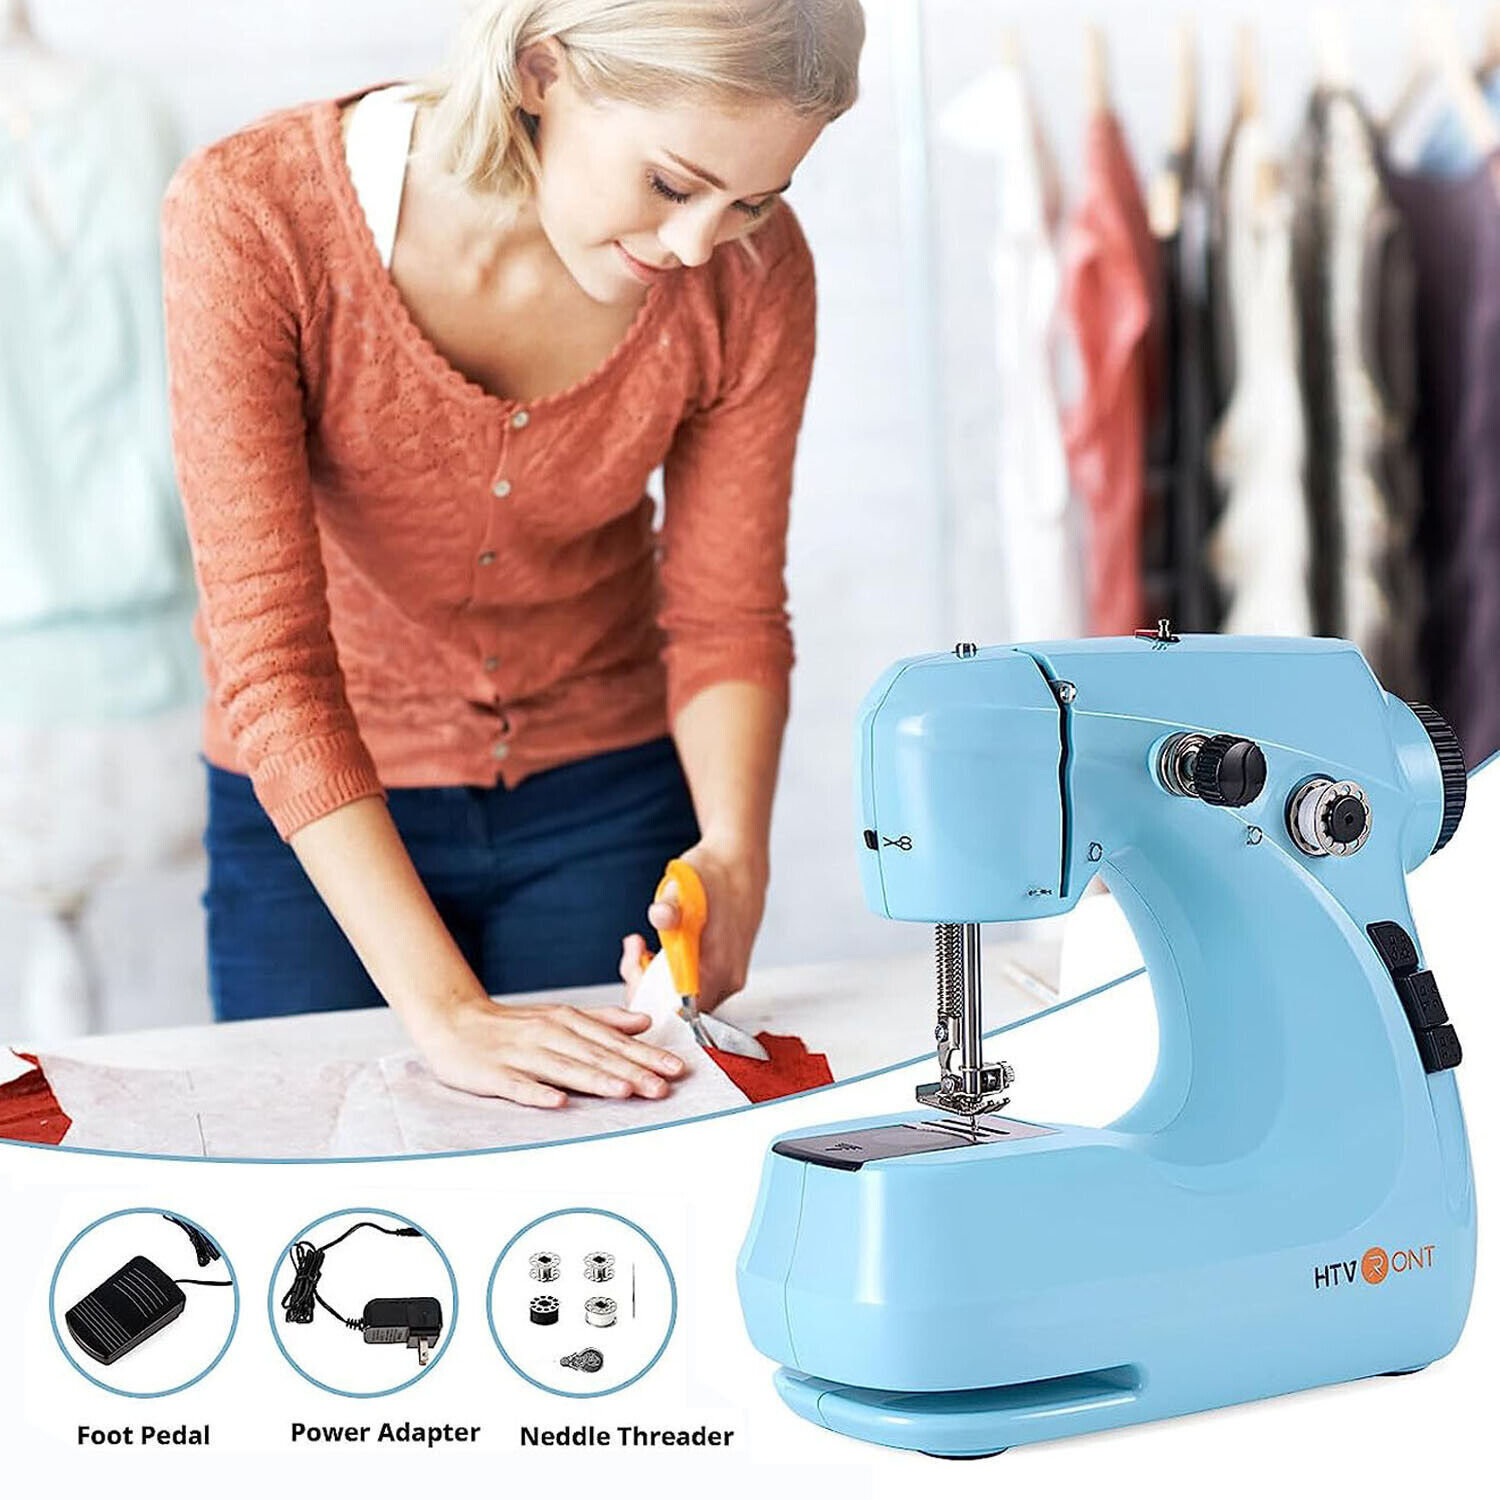 Sunbeam Compact Sewing Machine with Bonus Sewing Kit